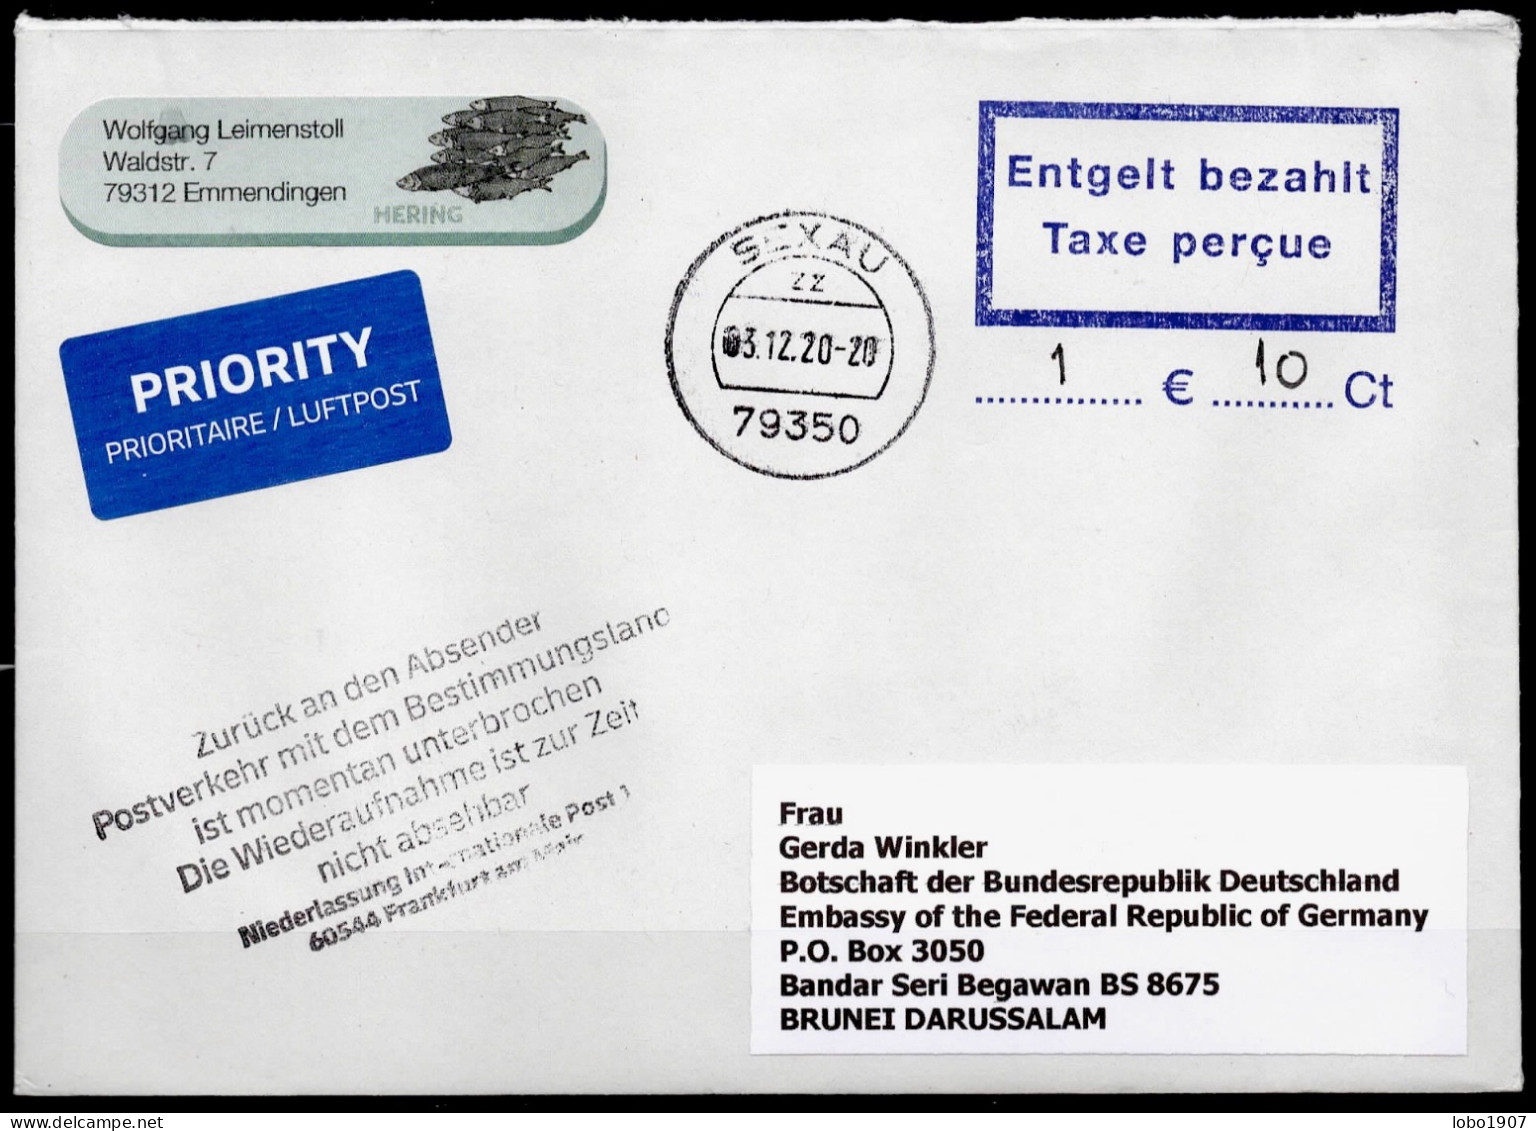 Corona Covid 19 Postal Service Interruption "Zurück An Den Absender... " Reply Coupon Paid Cover To BRUNEI DARUSSALEM - Brunei (1984-...)